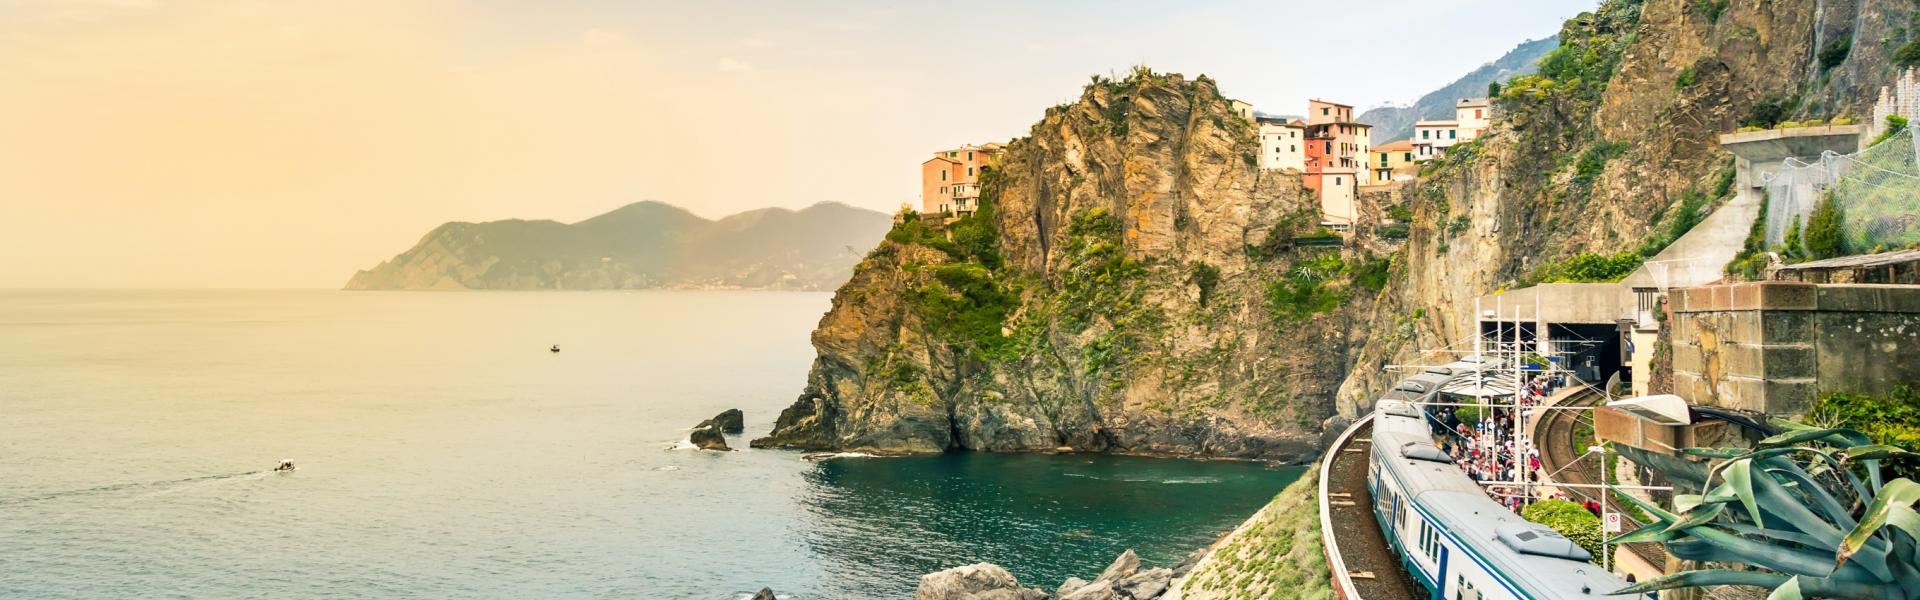 Casa vacanze in Liguria: tra fiori e bellezze antropiche - Casamundo